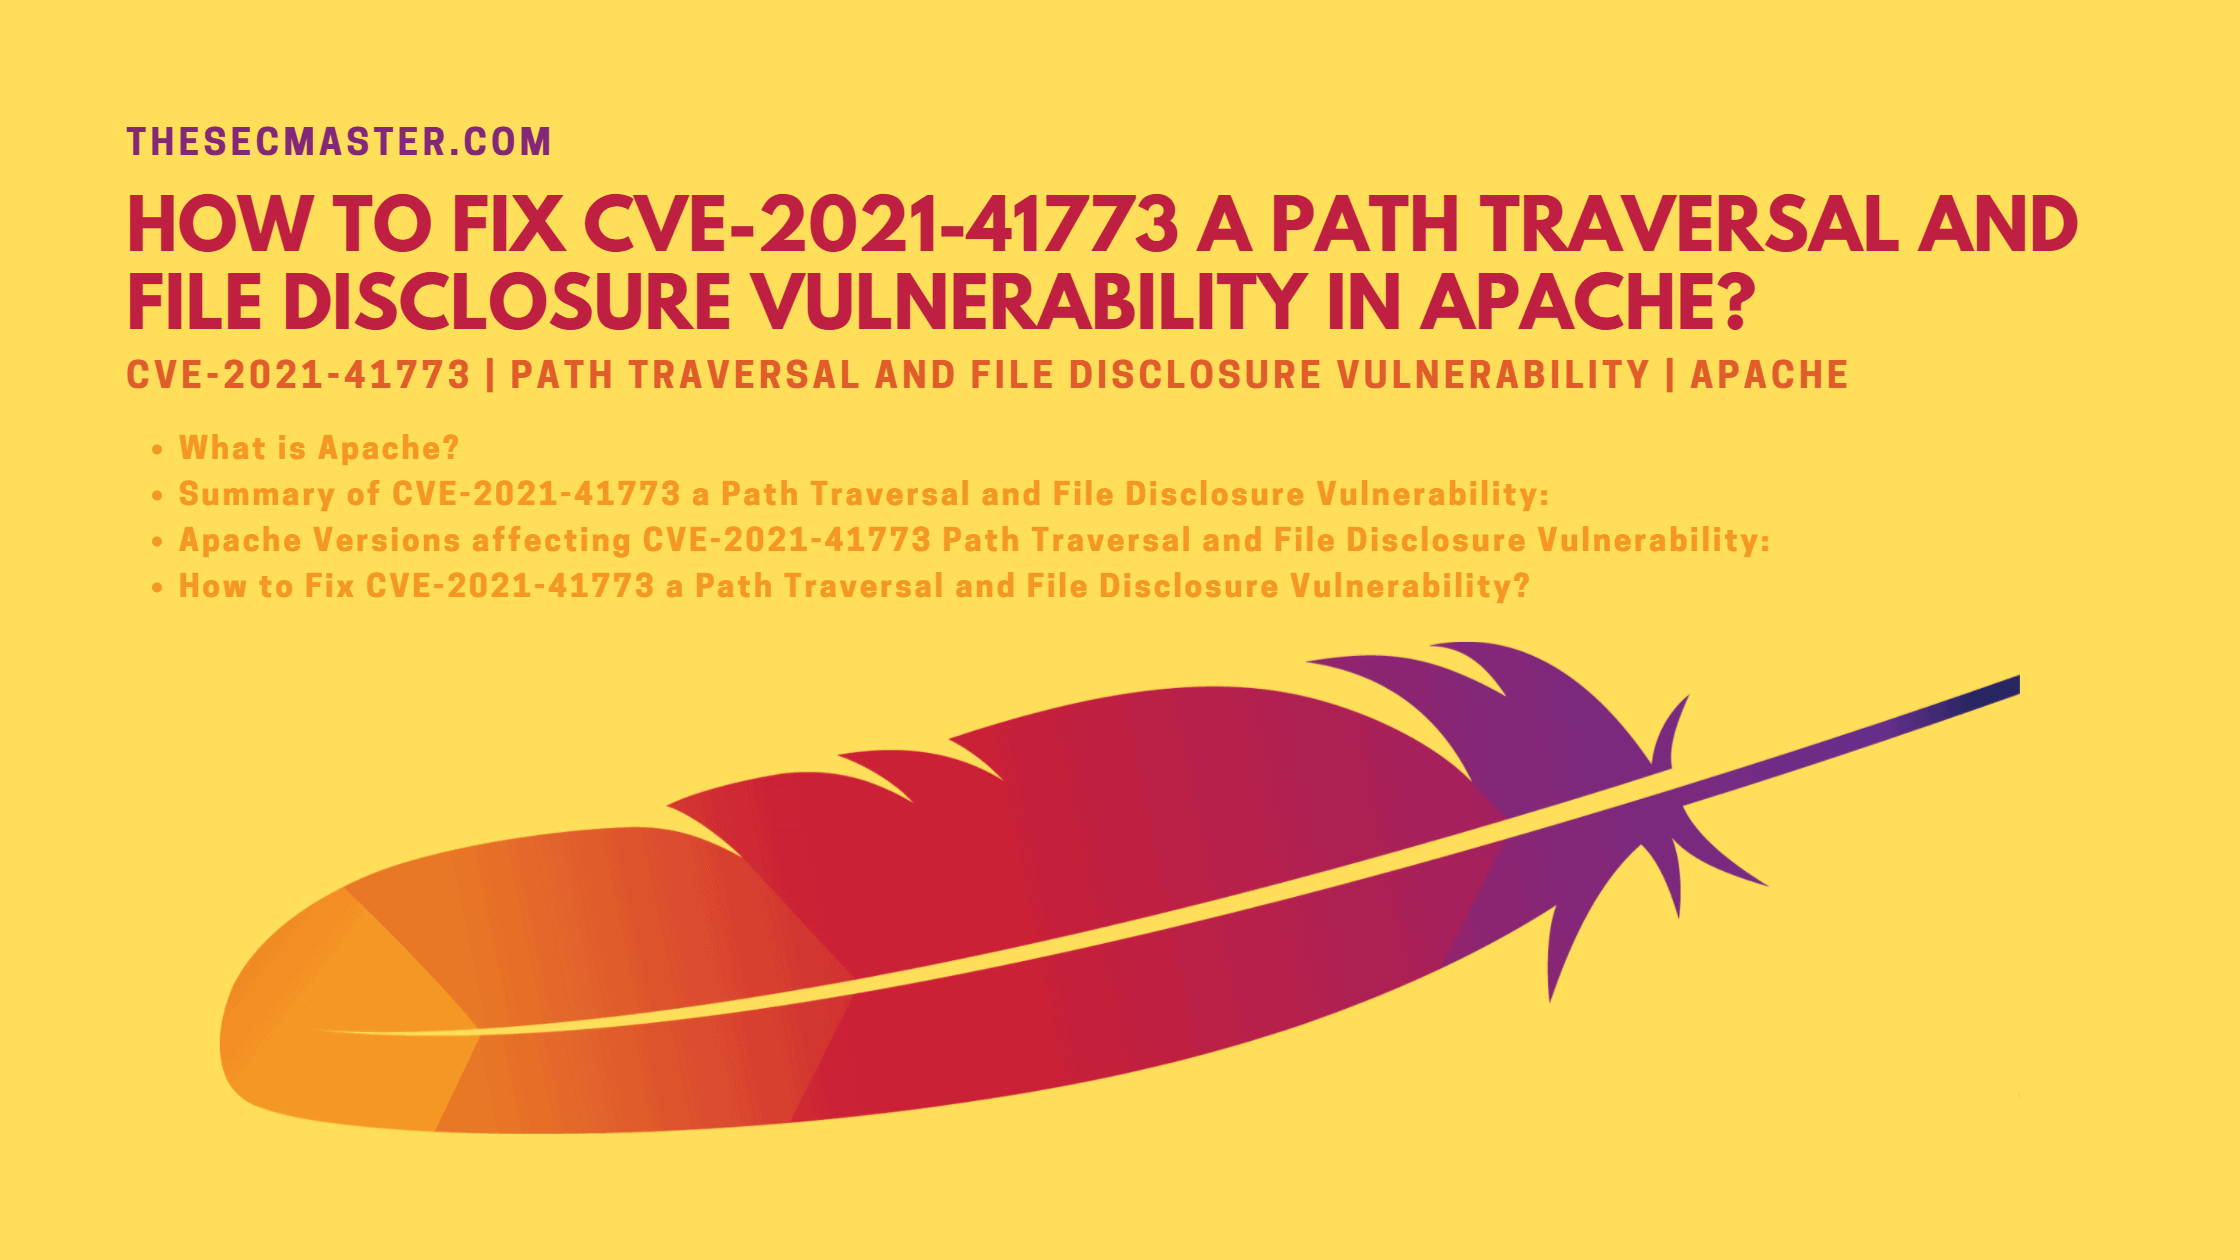 How To Fix Cve 2021 41773 A Path Traversal And File Disclosure Vulnerability In Apache